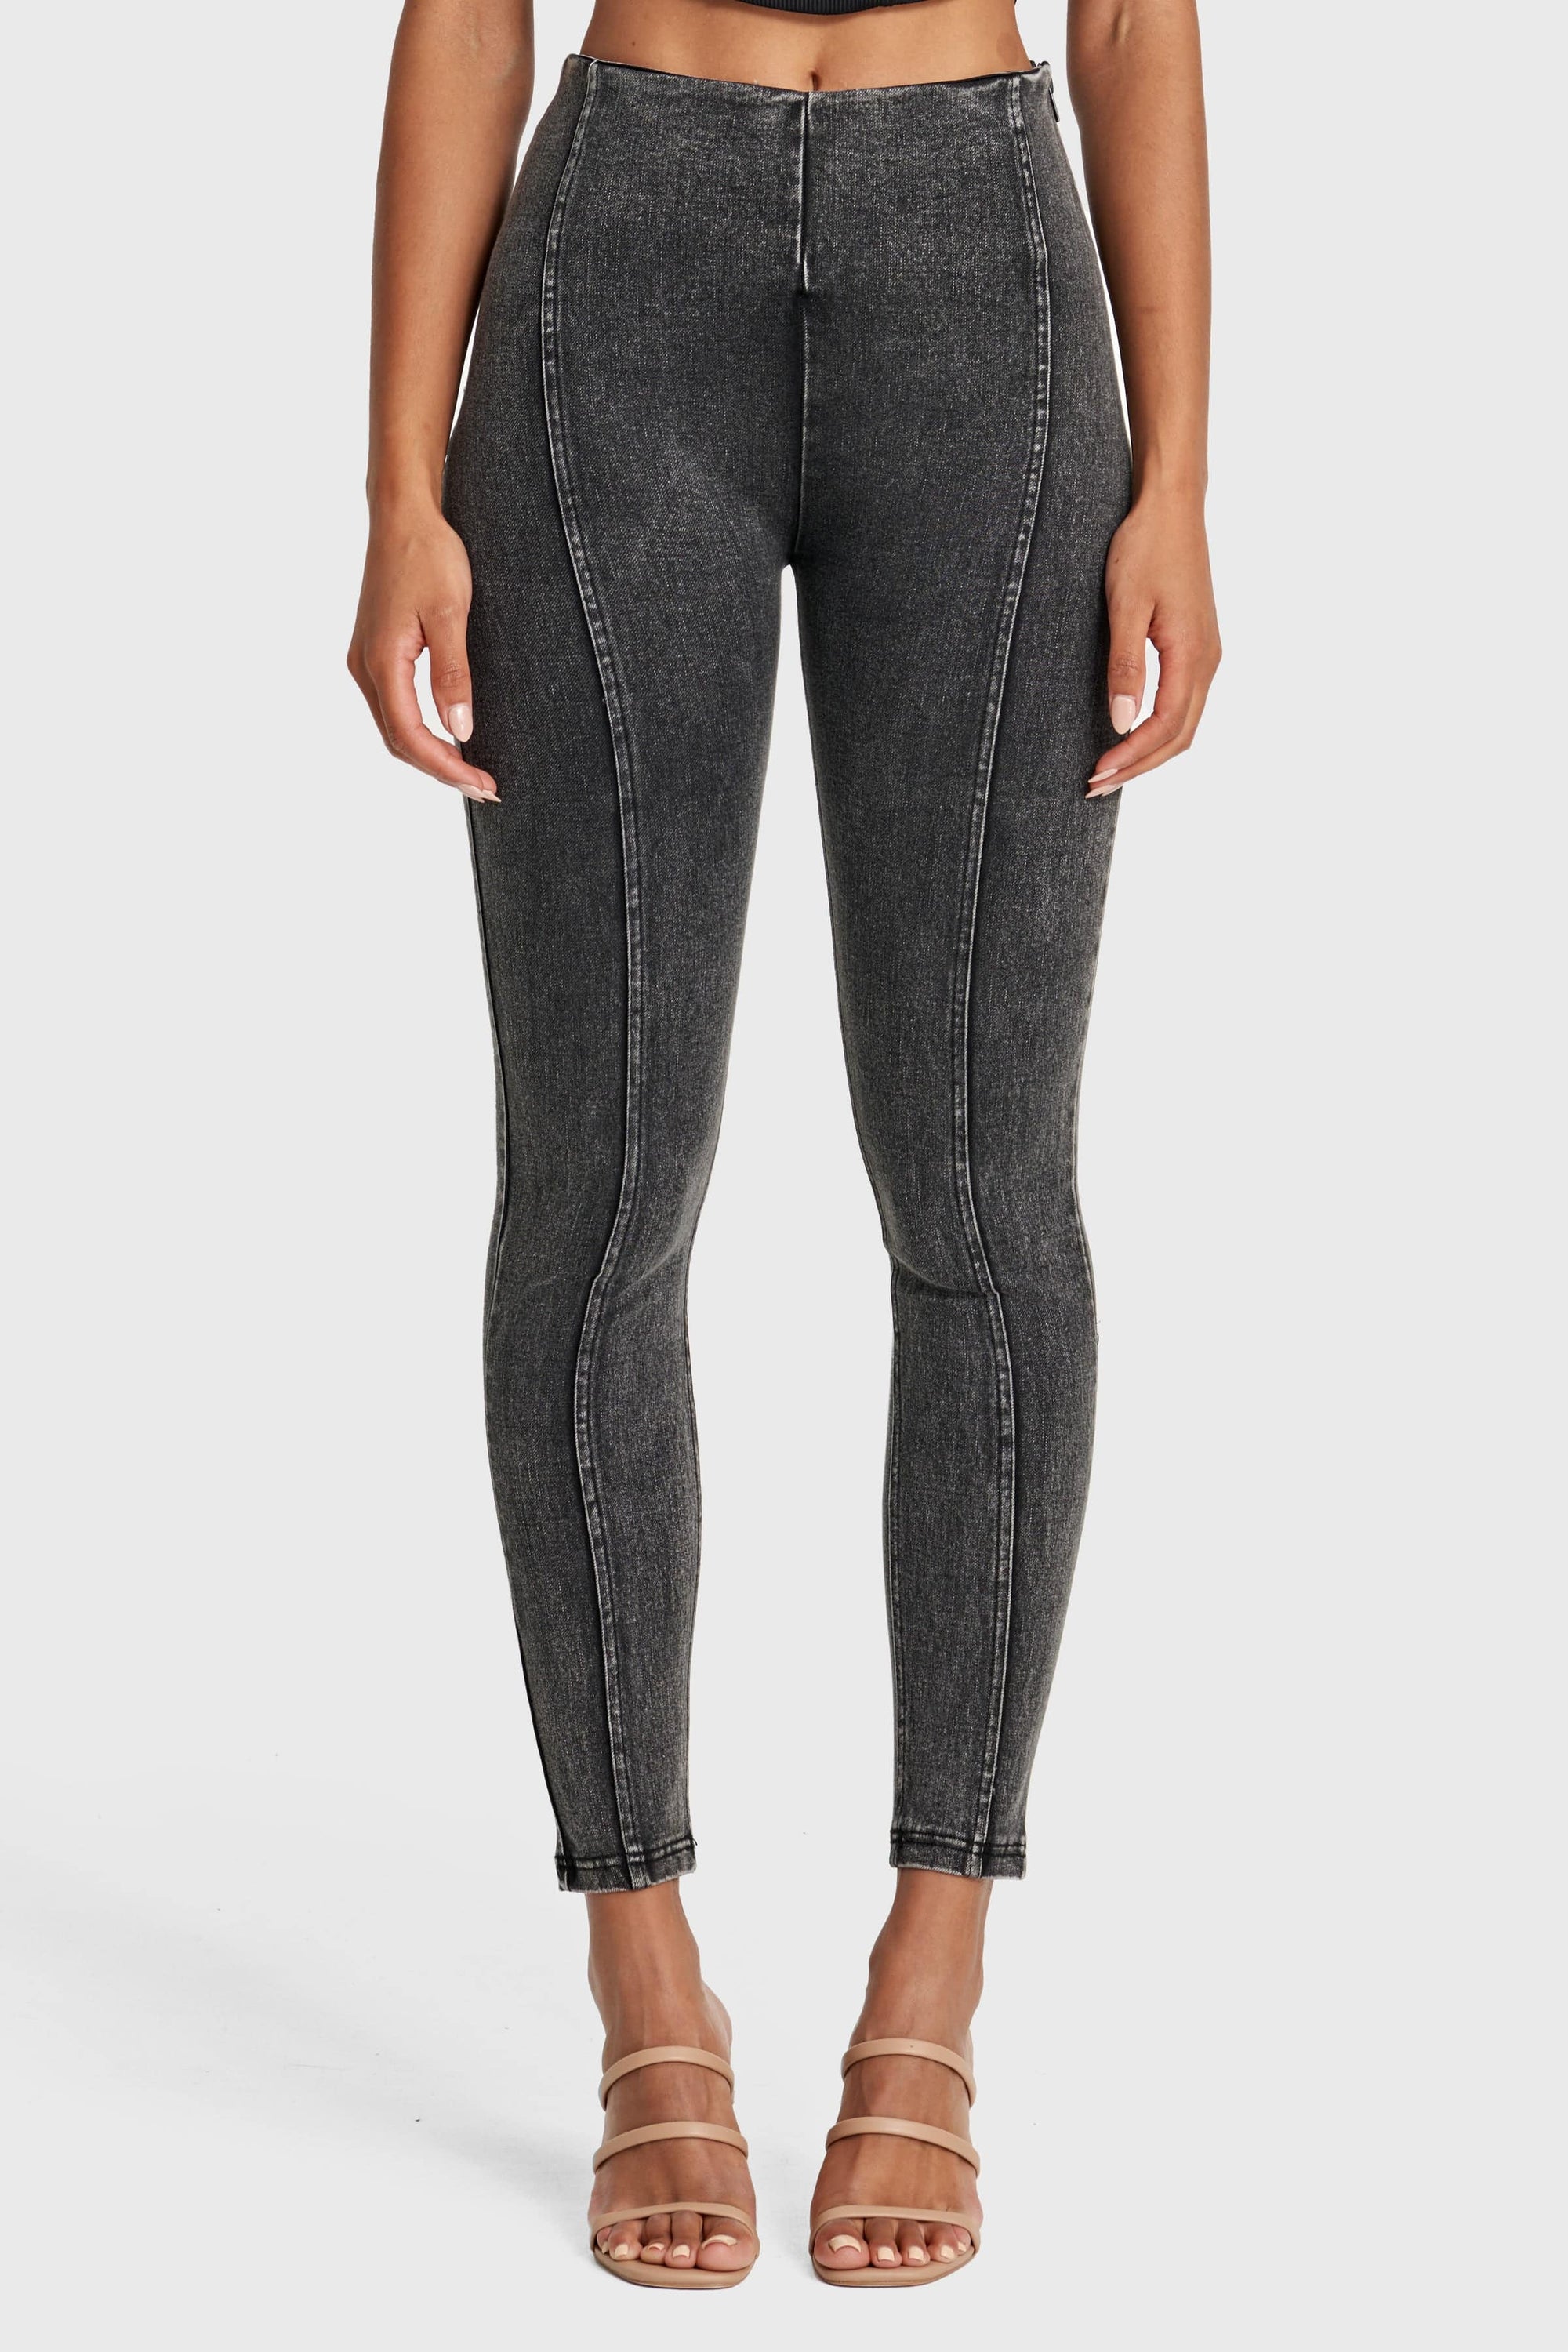 WR.UP® Snug Jeans - High Waisted - Full Length - Washed Black + Black Stitching 6